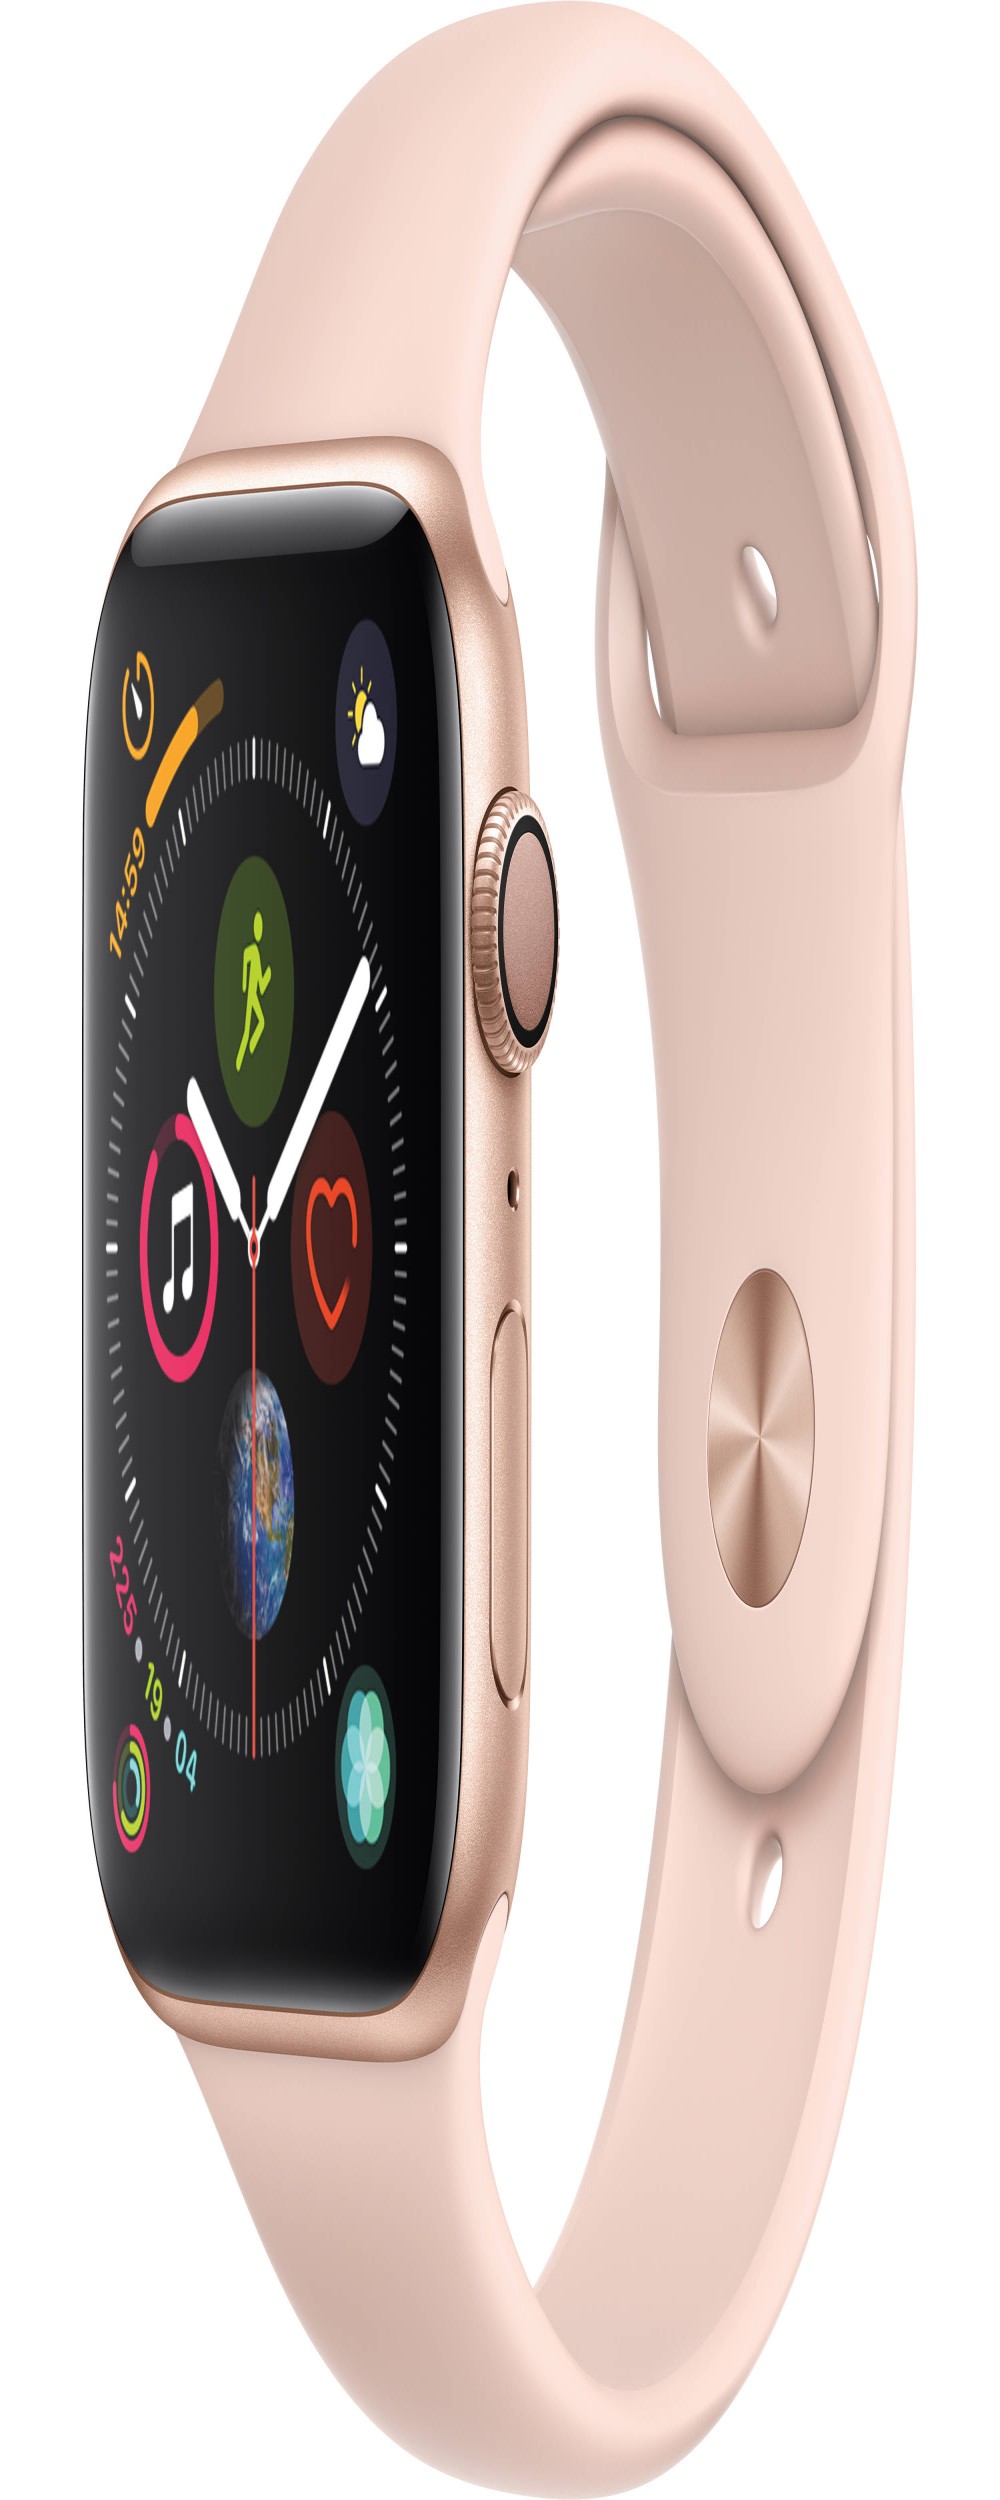 Apple Watch Series 4 44 mm MU6F2LL/A A1978 – Gold/Pink Sand